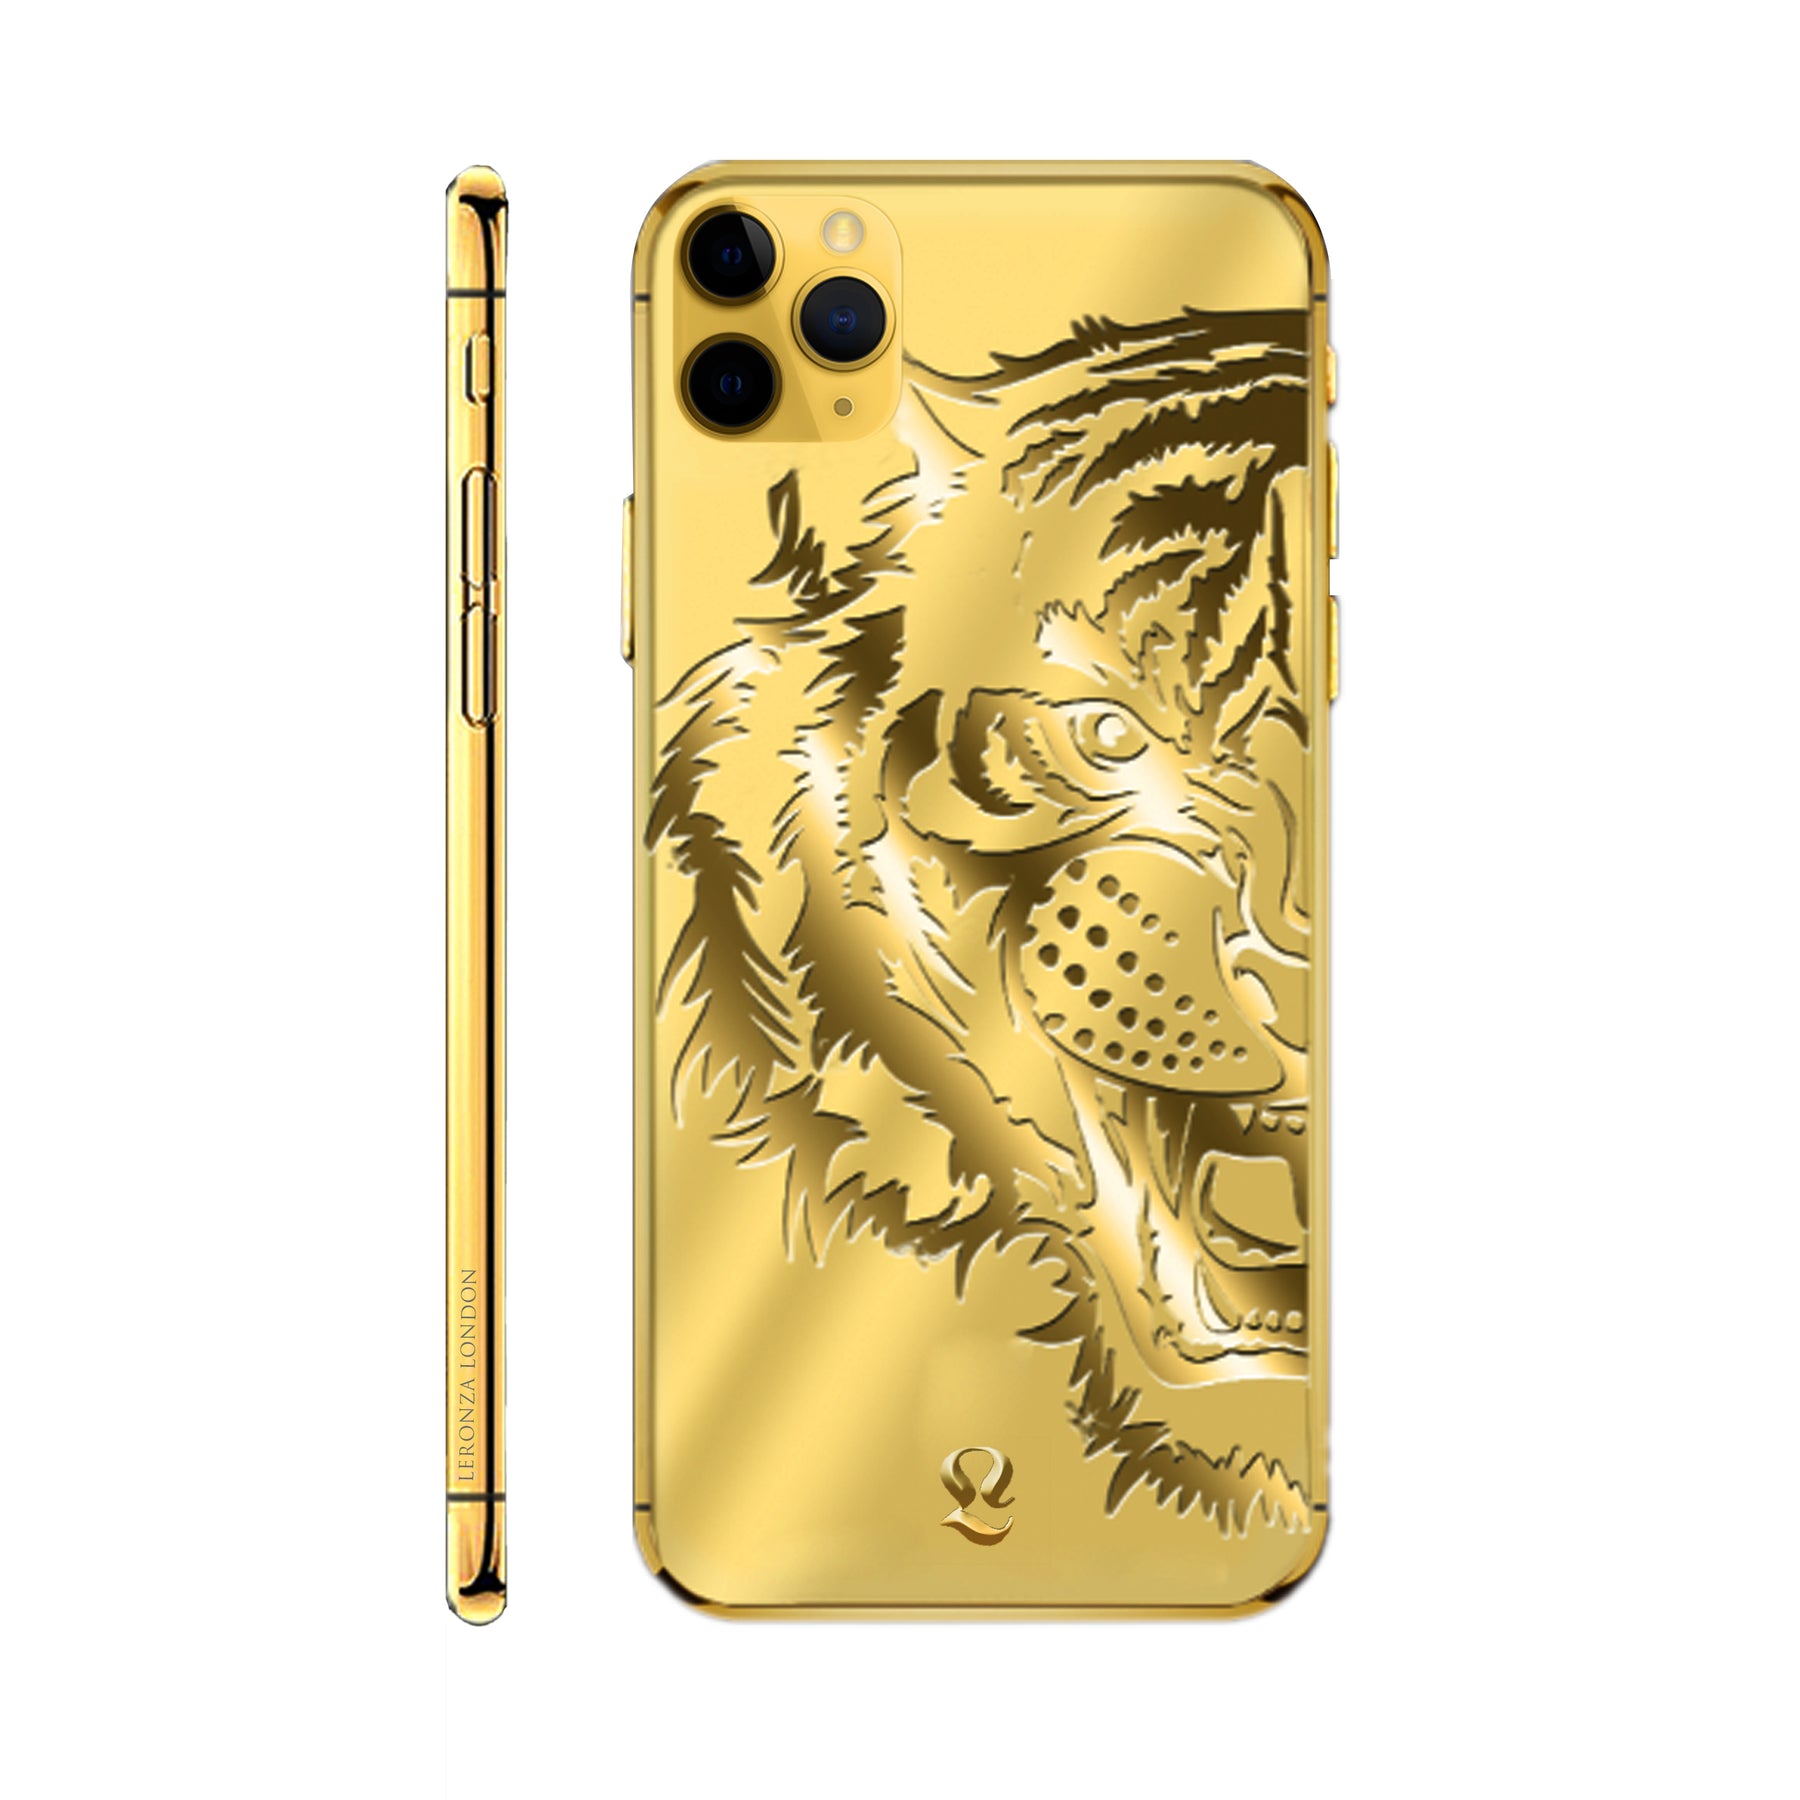 Crocojones Iphone 11 Gold 24k